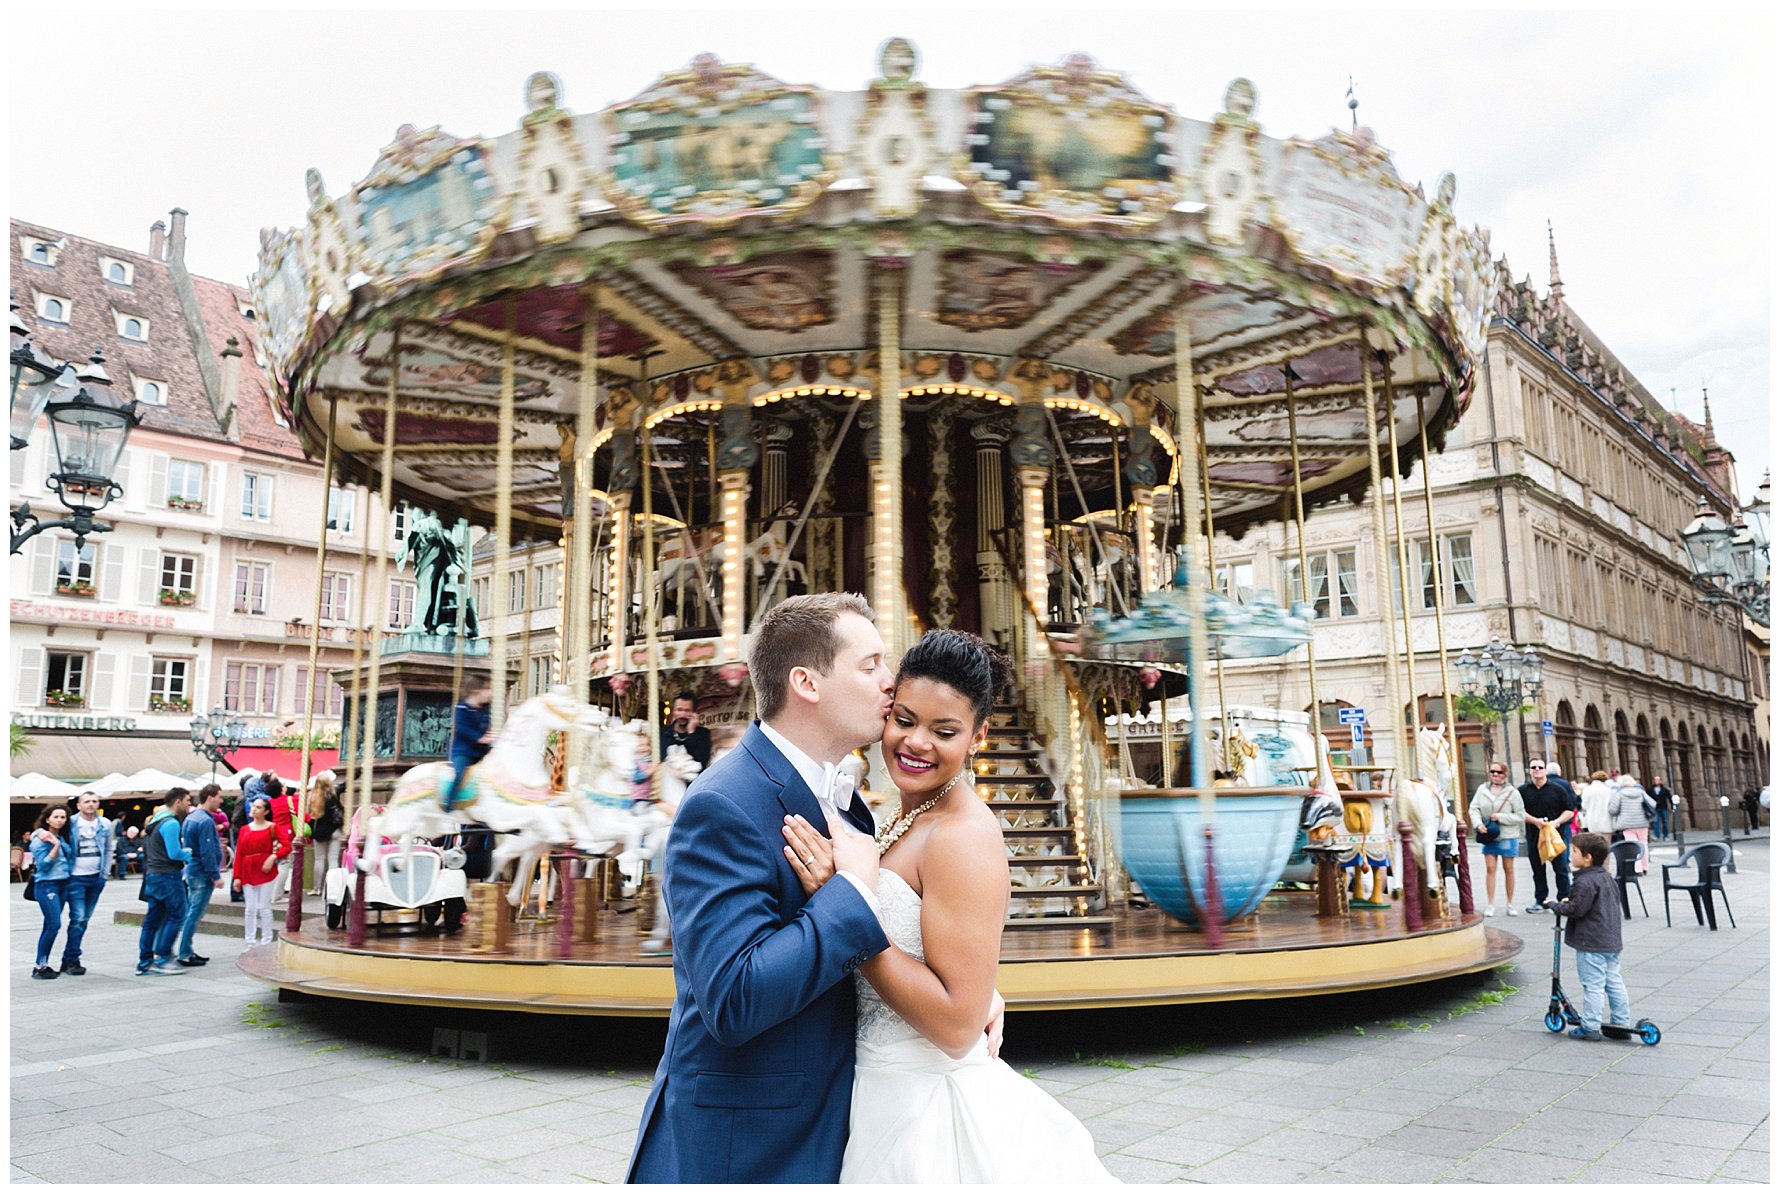 Carousel Wedding Photography by Amanda and Grady